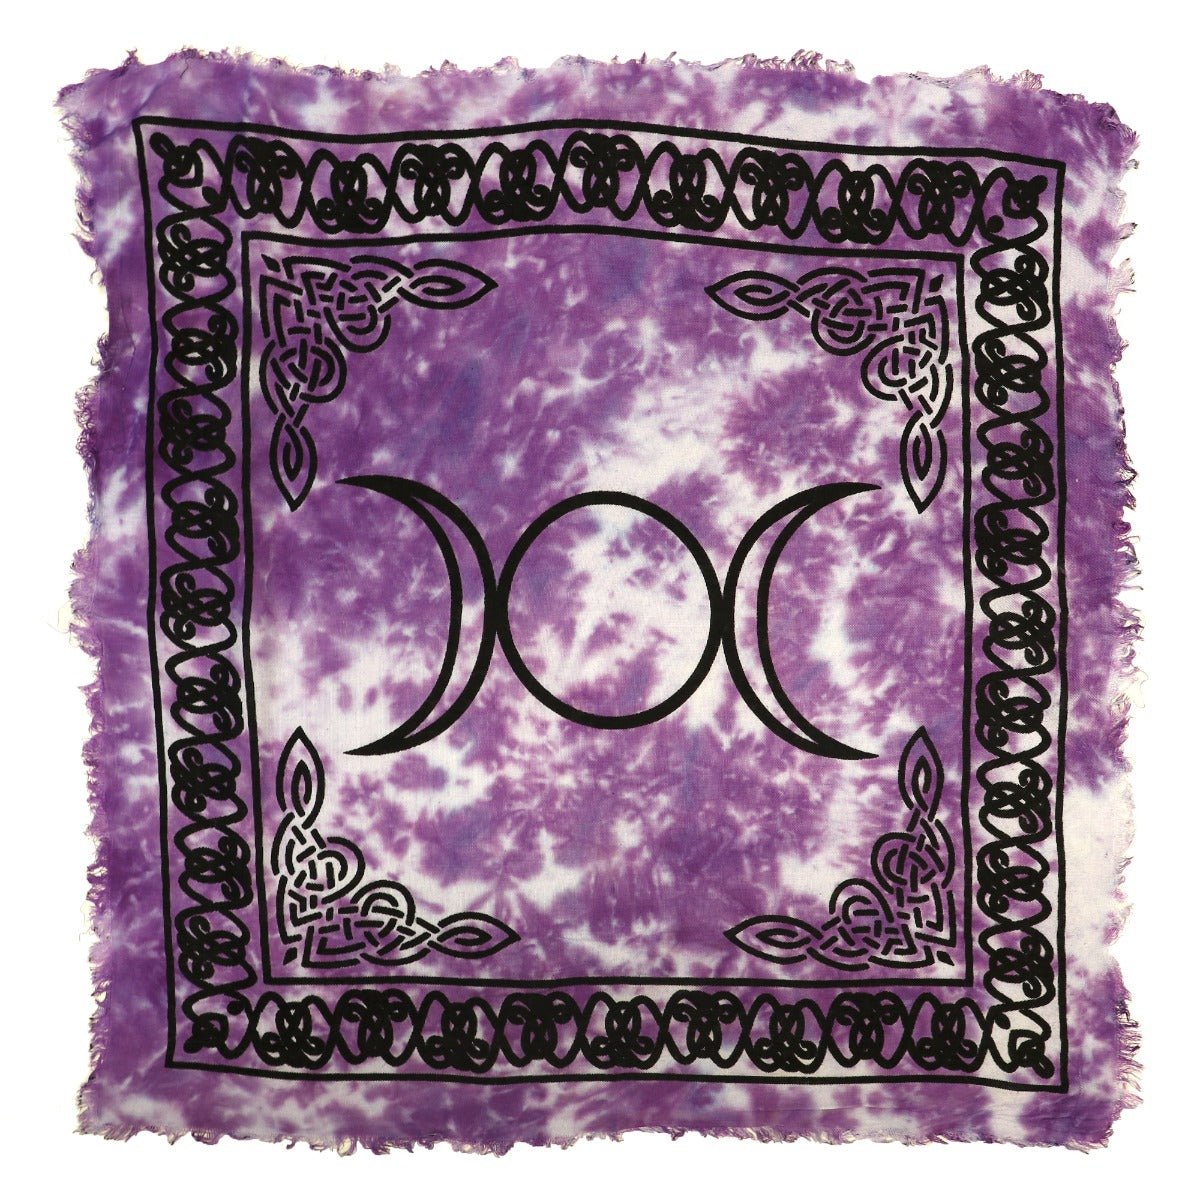 Triple Moon Altar Cloth, 18 inch Purple - 13 Moons